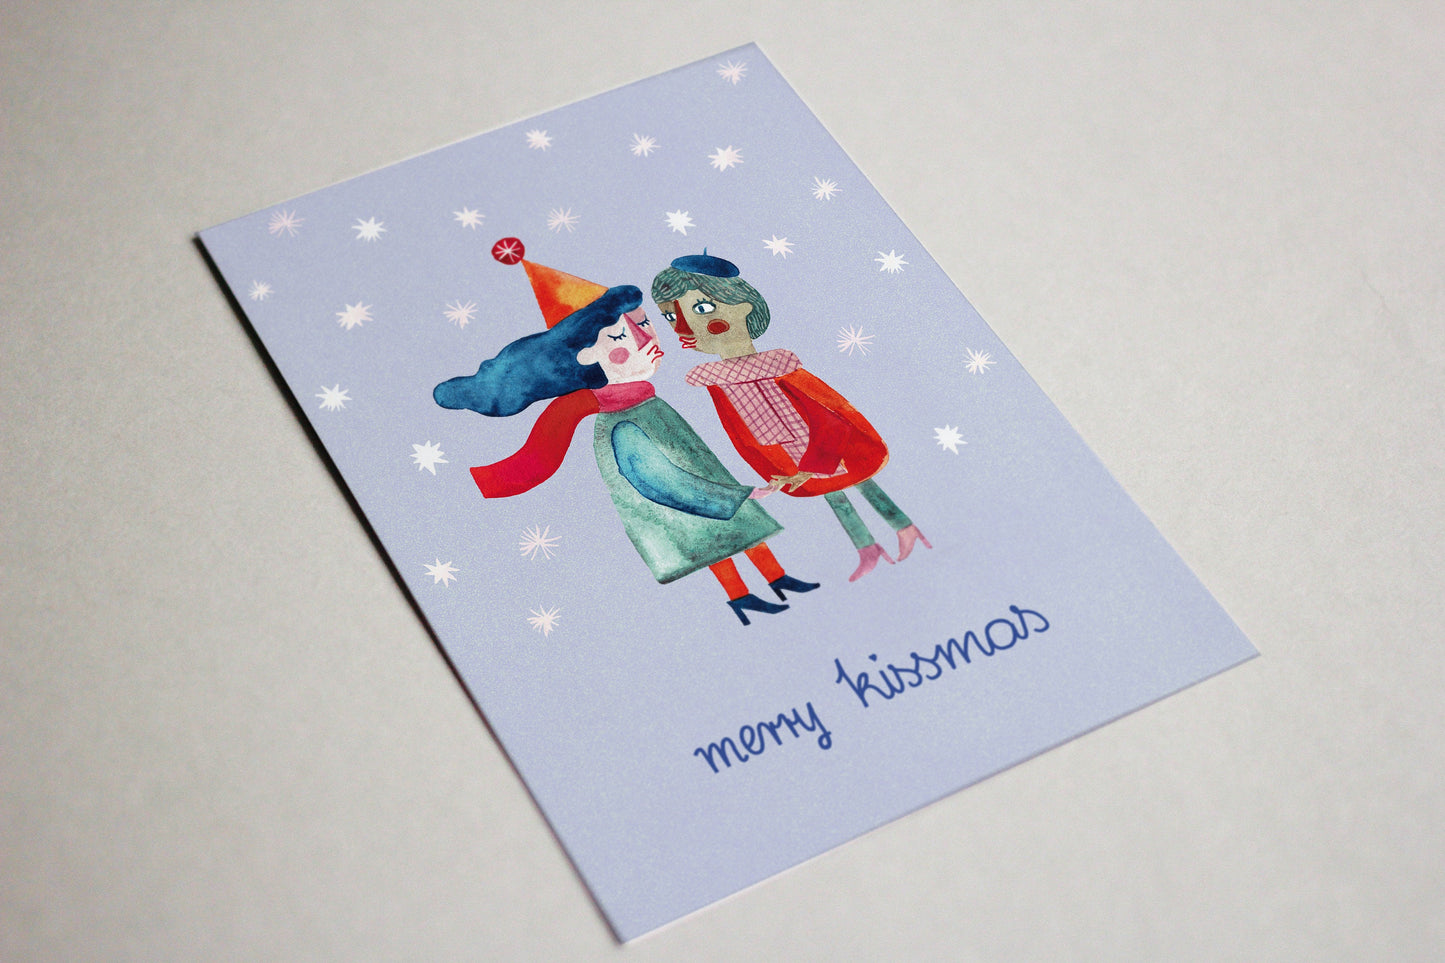 Postkarte "Merry Kissmas" girls